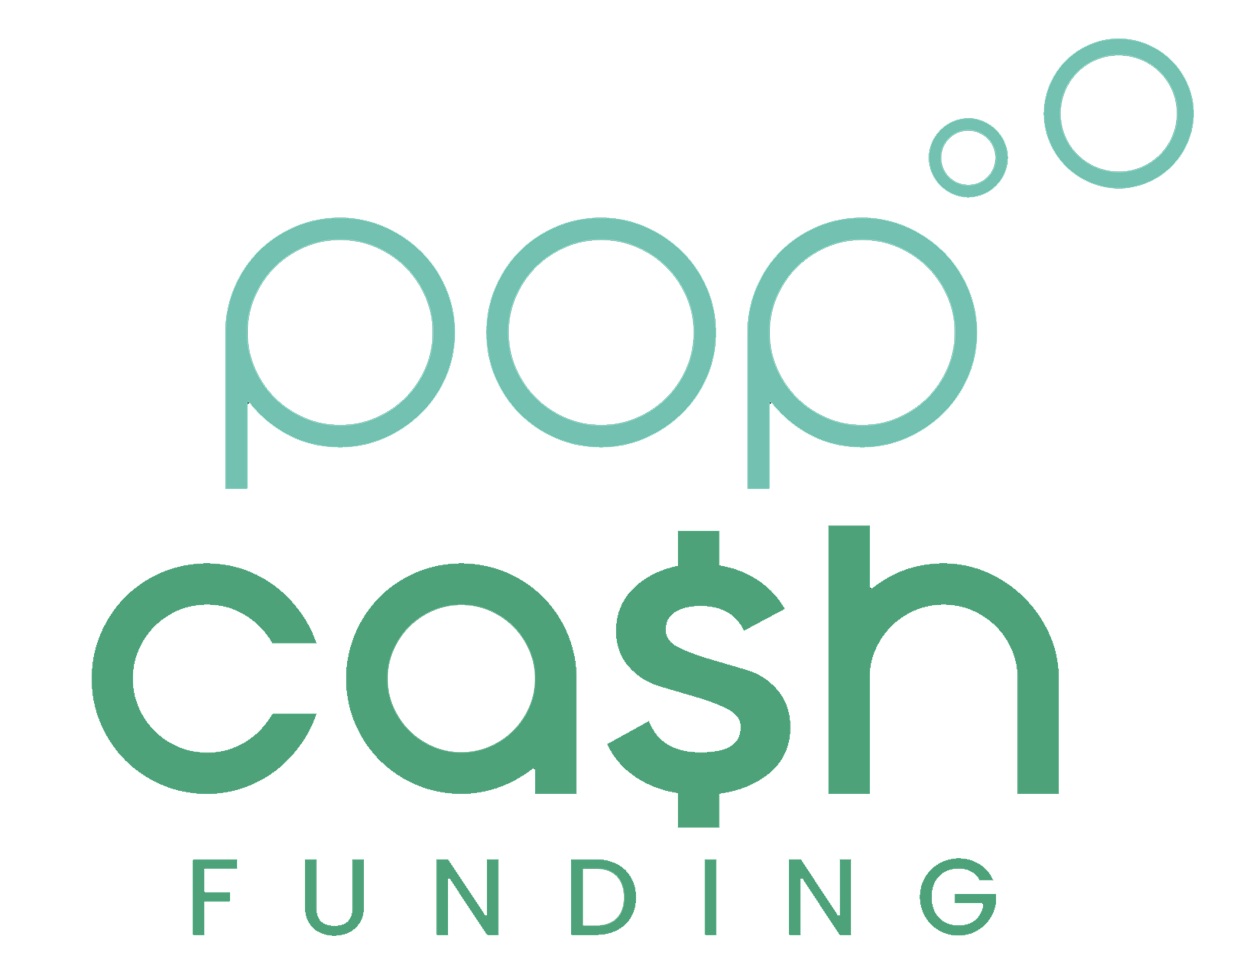 More banks being added to popular funding platform, PopCash Funding